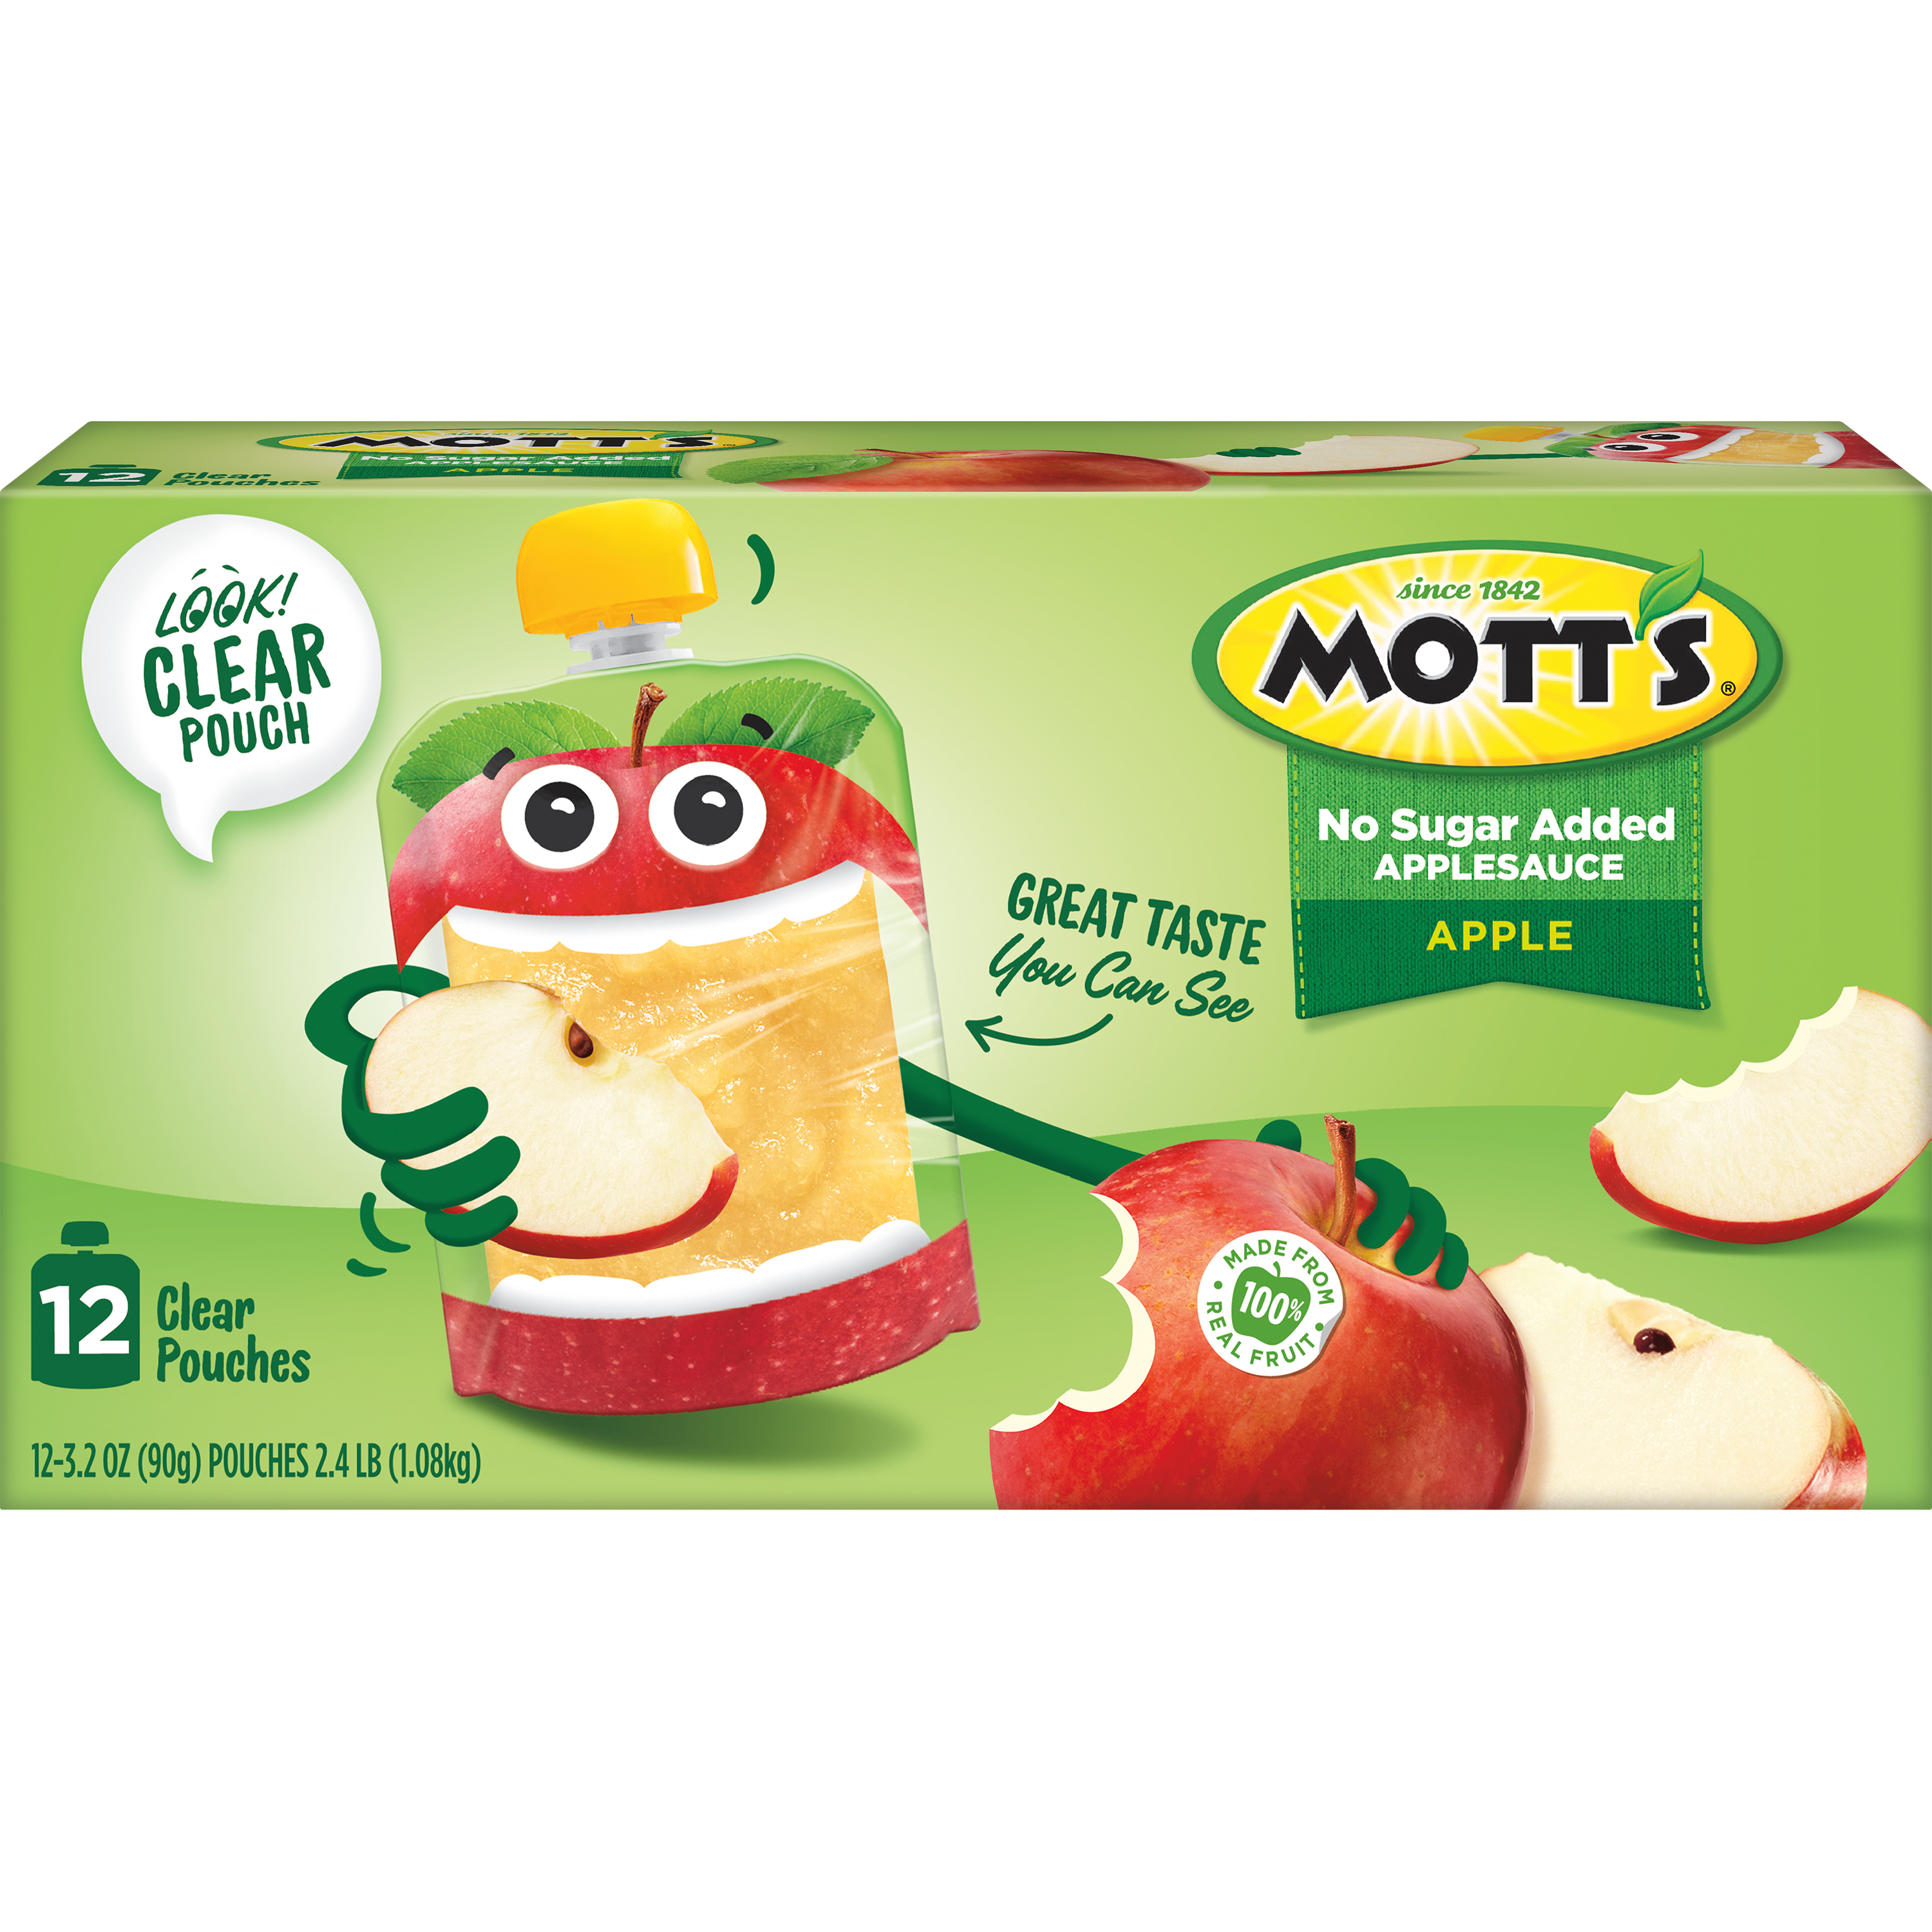 Mott's® No Sugar Added Applesauce Apple 3.2oz 12-pack clear pouches box